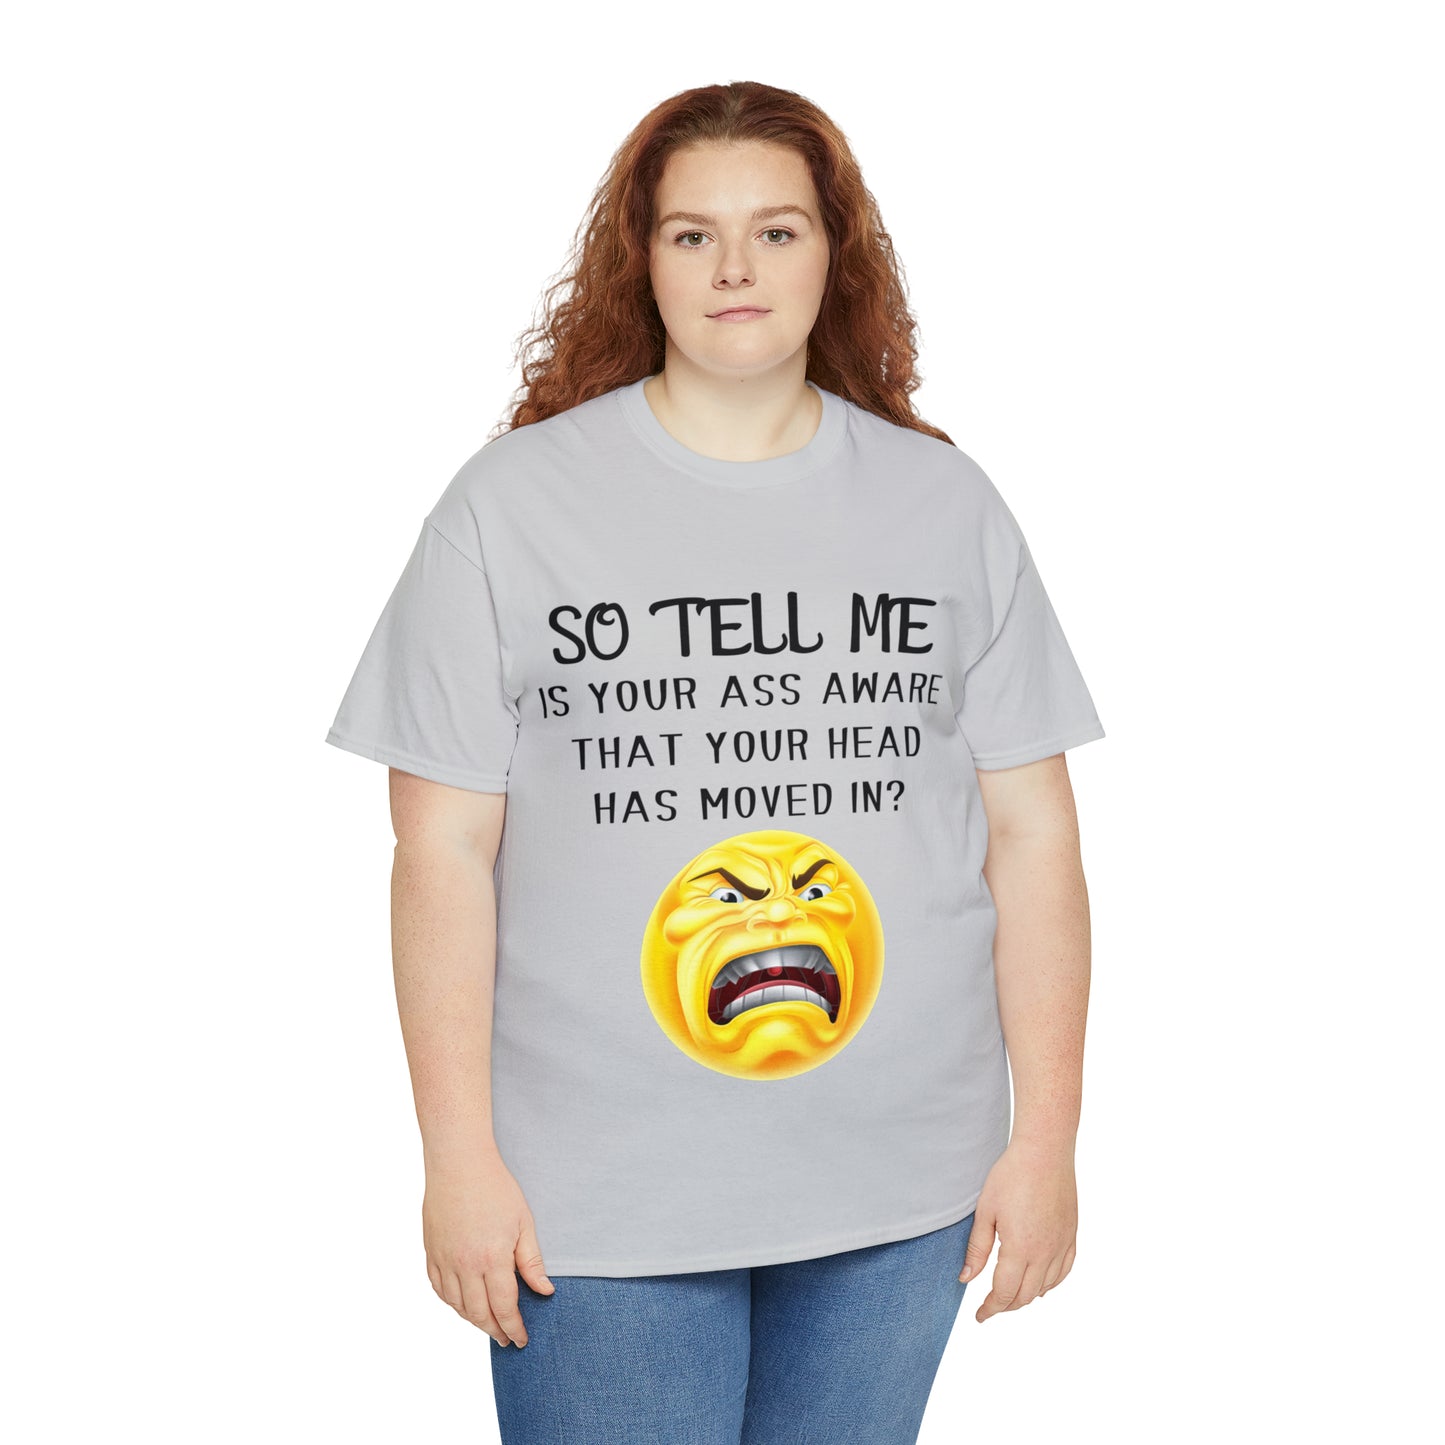 Funny Quote Shirts, Feminist Shirt, Novelty T-shirt, Sarcastic T-shirt